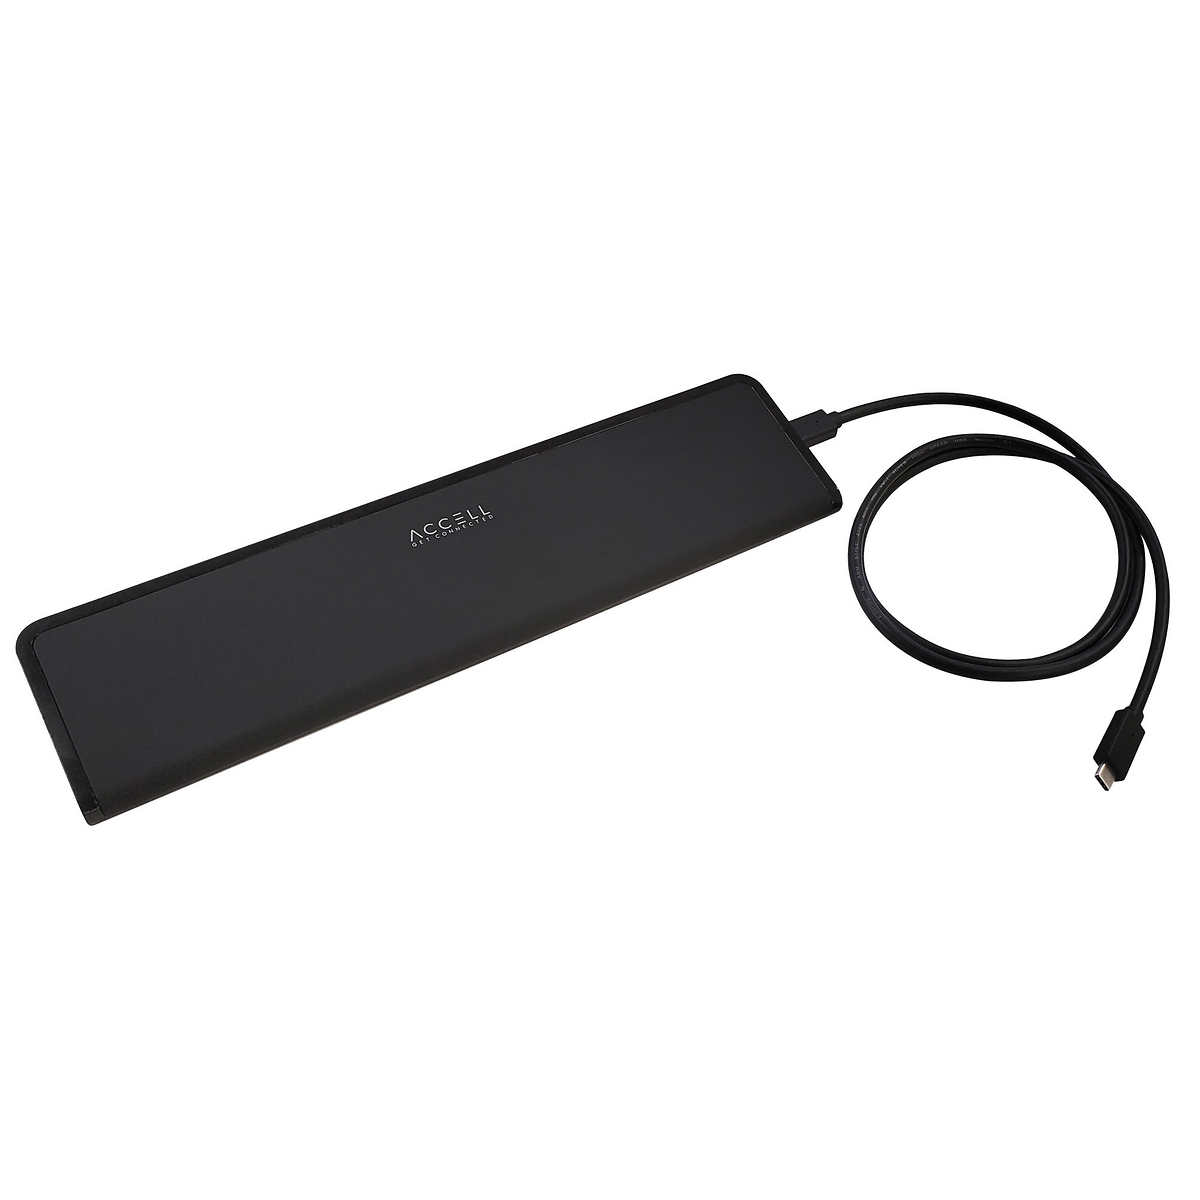 Aestoria MacBook Docking Station - Air Pro USB C Dock Dual Monitor Double  HDMI Display 10 Port